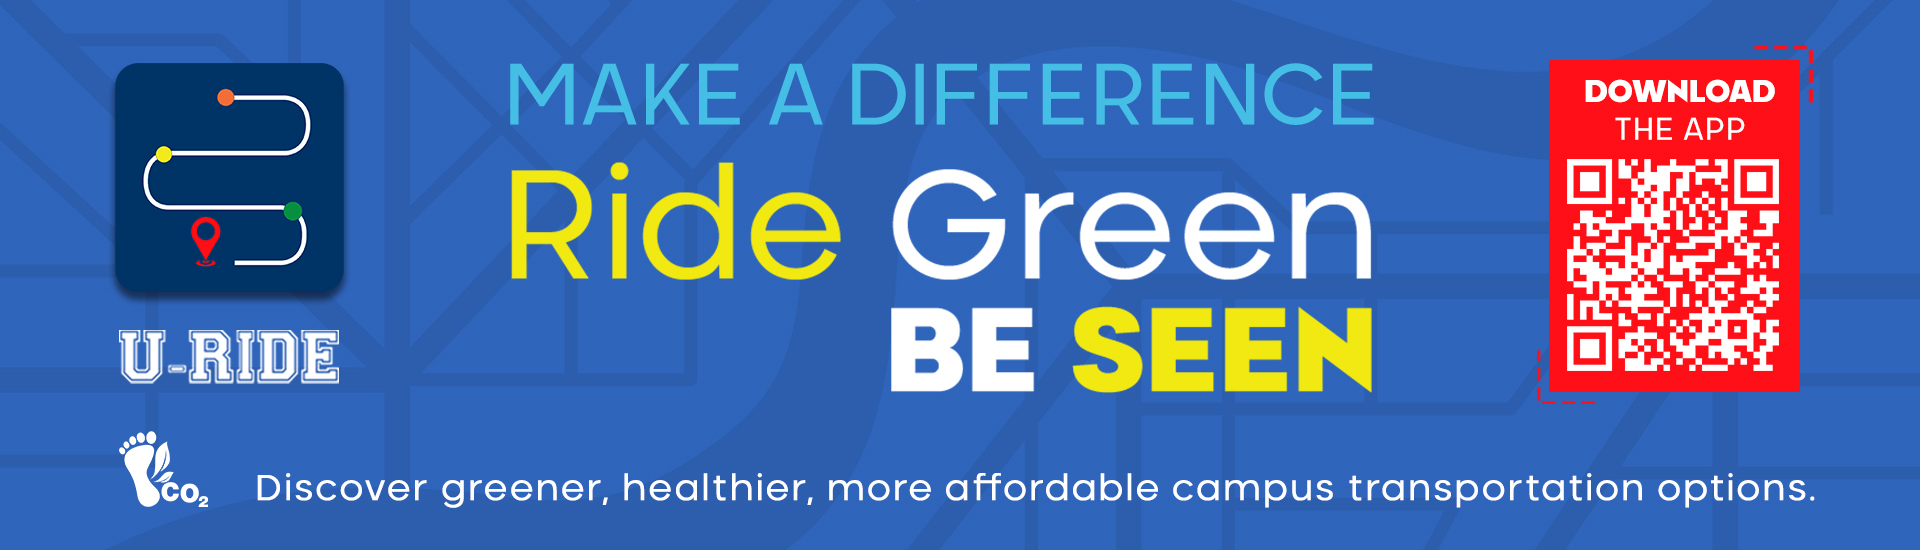 U-Ride provides greener, healthier, more affordable campus transportation options.